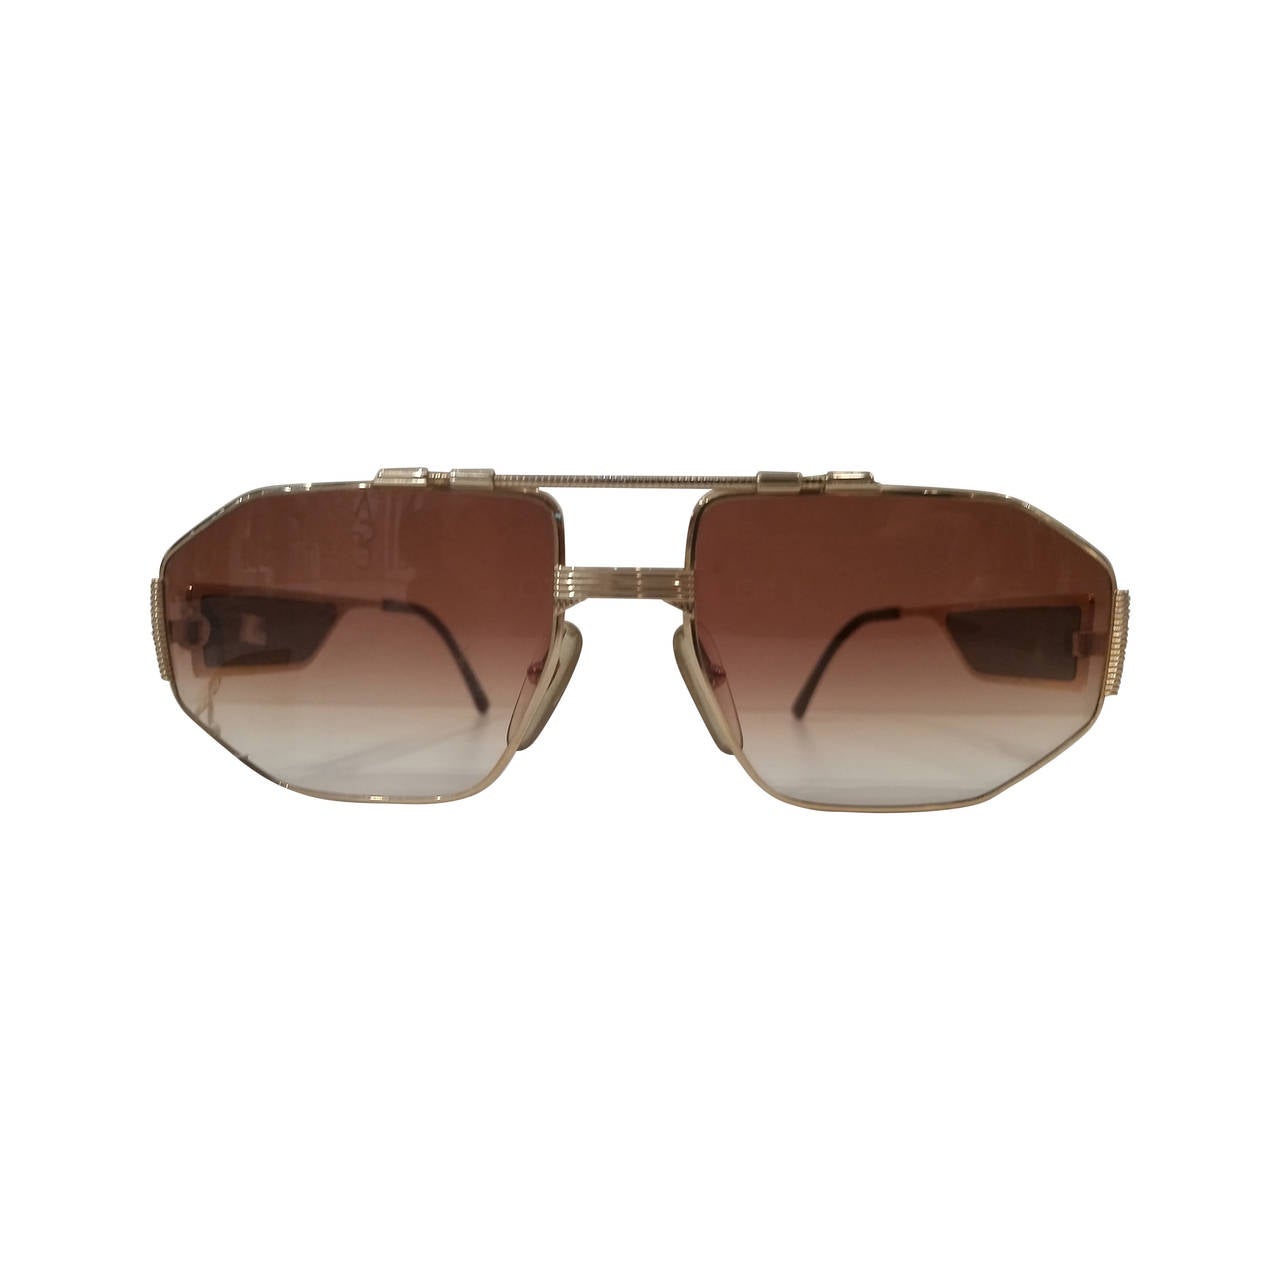 1980s Christian Dior sunglasses